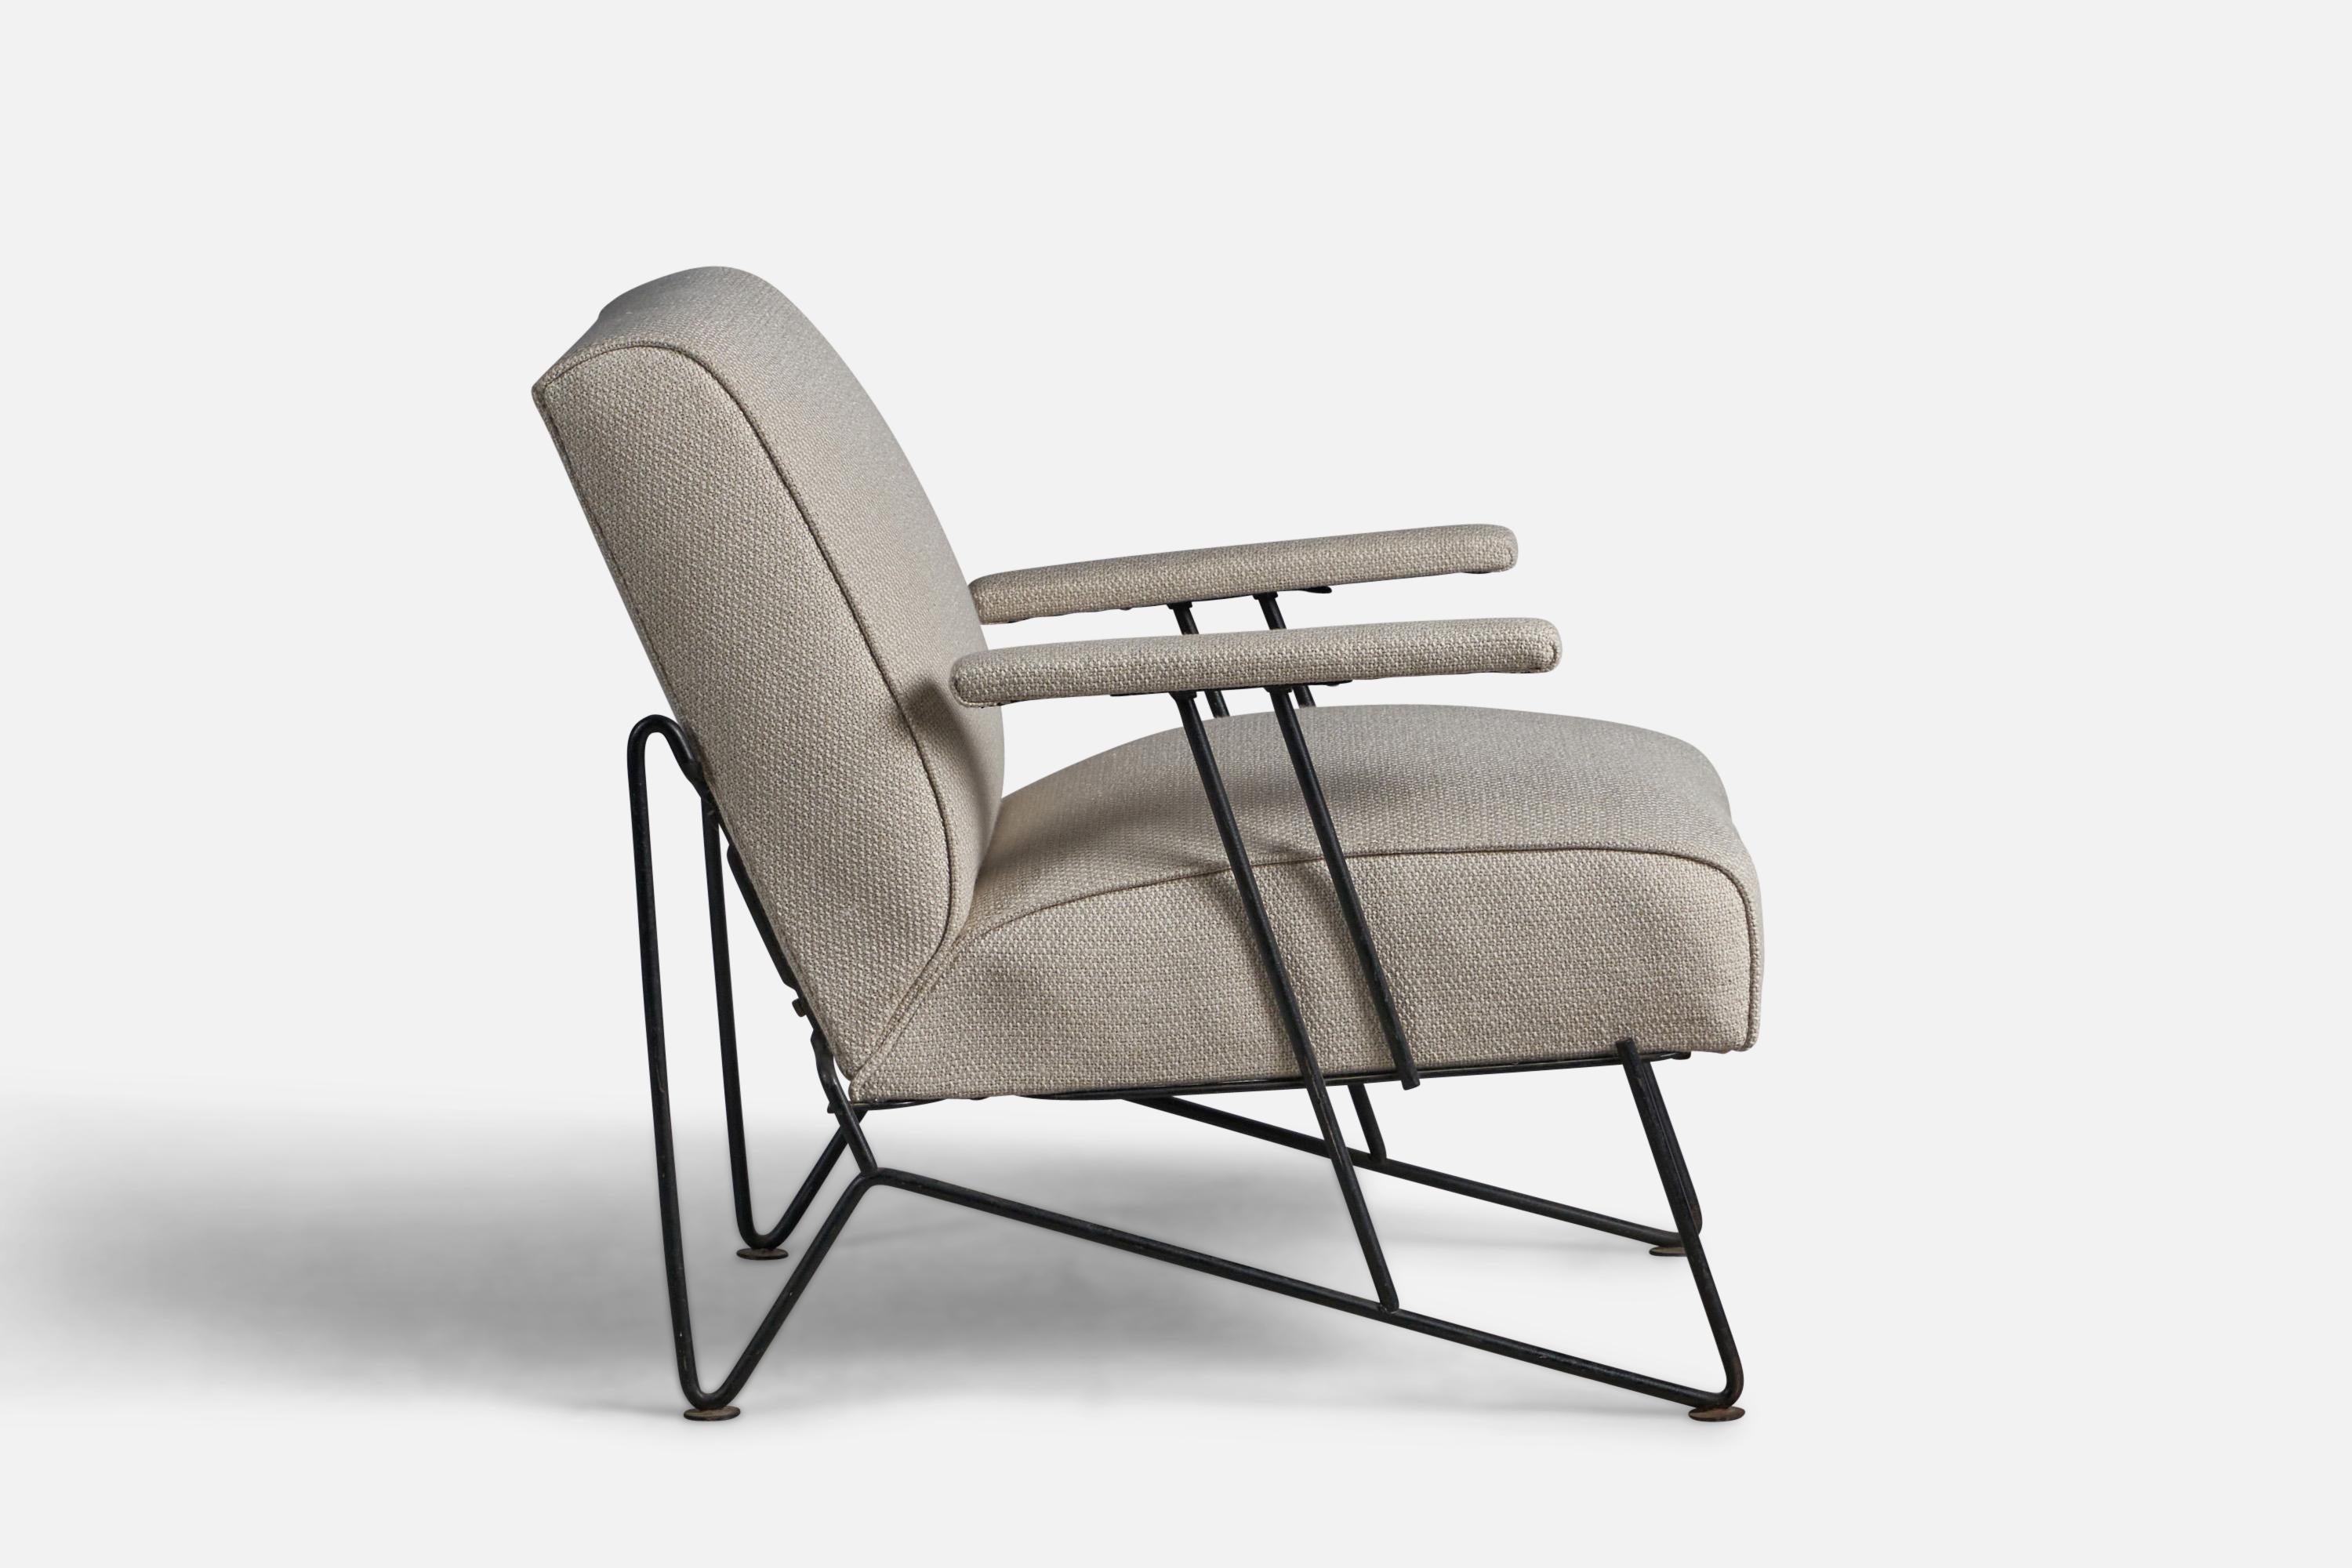 Dan Johnson, Lounge Chair, Iron, Fabric, USA, 1950s For Sale 1